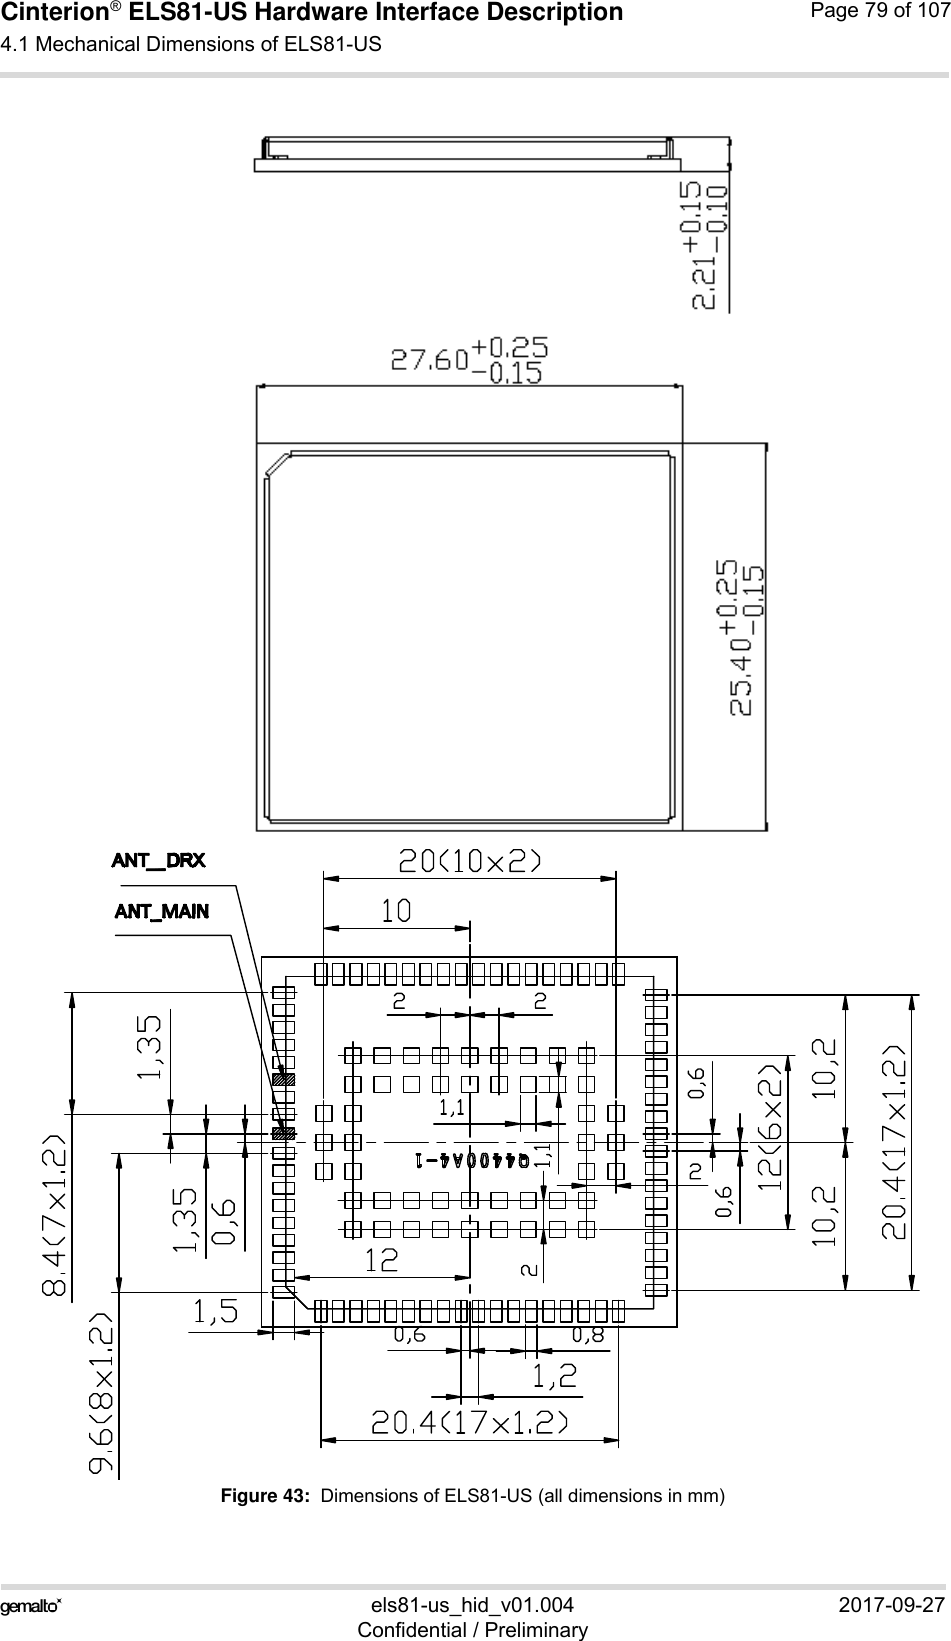 Cinterion® ELS81-US Hardware Interface Description4.1 Mechanical Dimensions of ELS81-US92els81-us_hid_v01.004 2017-09-27Confidential / PreliminaryPage 79 of 107Figure 43:  Dimensions of ELS81-US (all dimensions in mm)